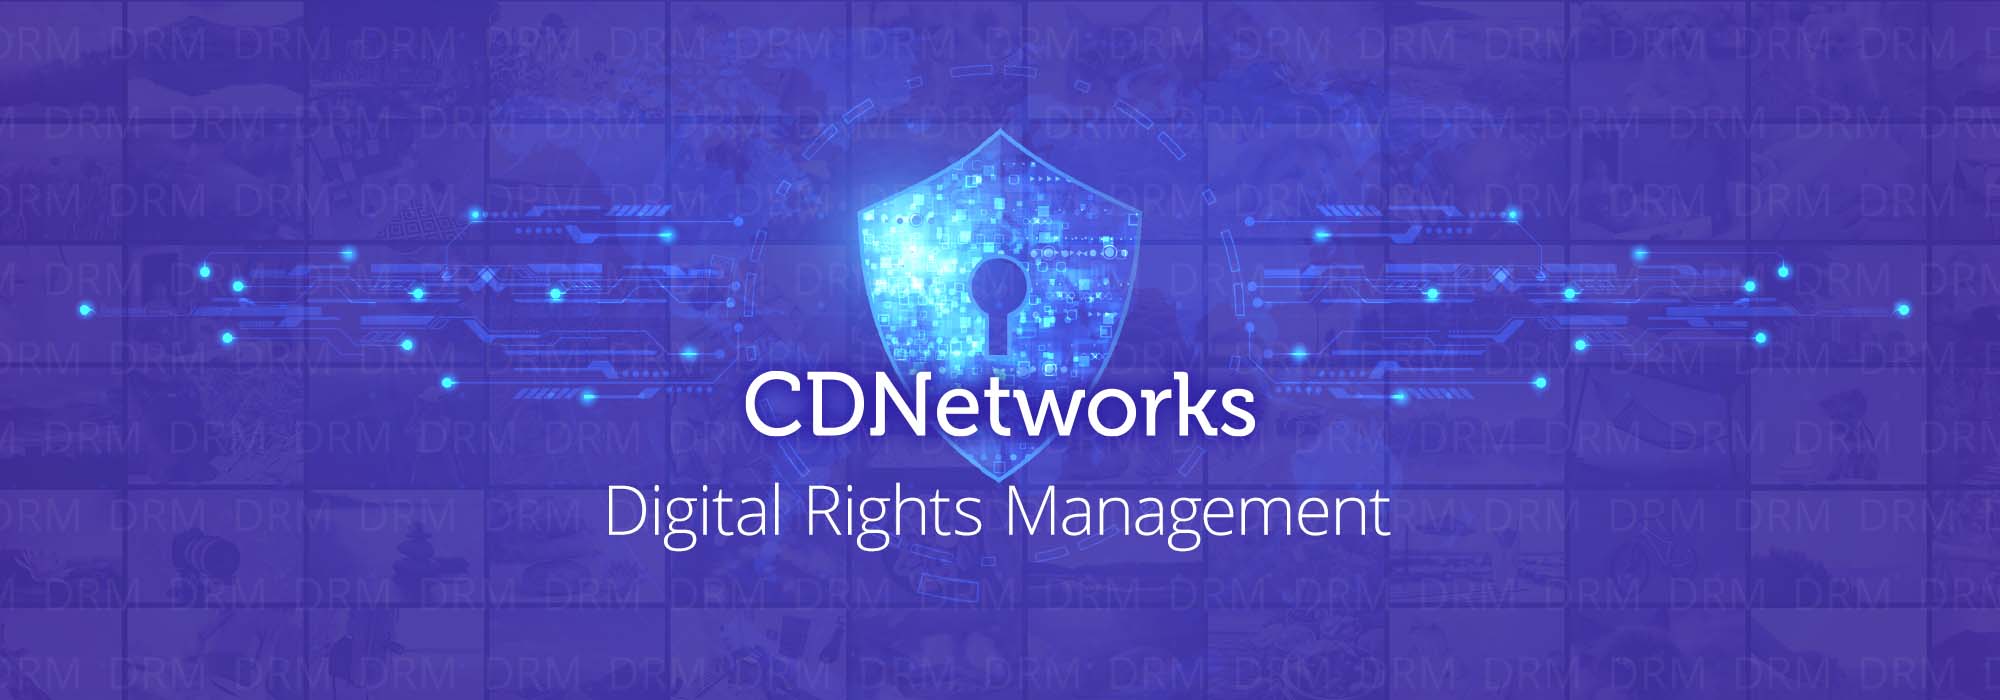 CDNetworks 通过内置 DRM 进一步增强媒体安全性